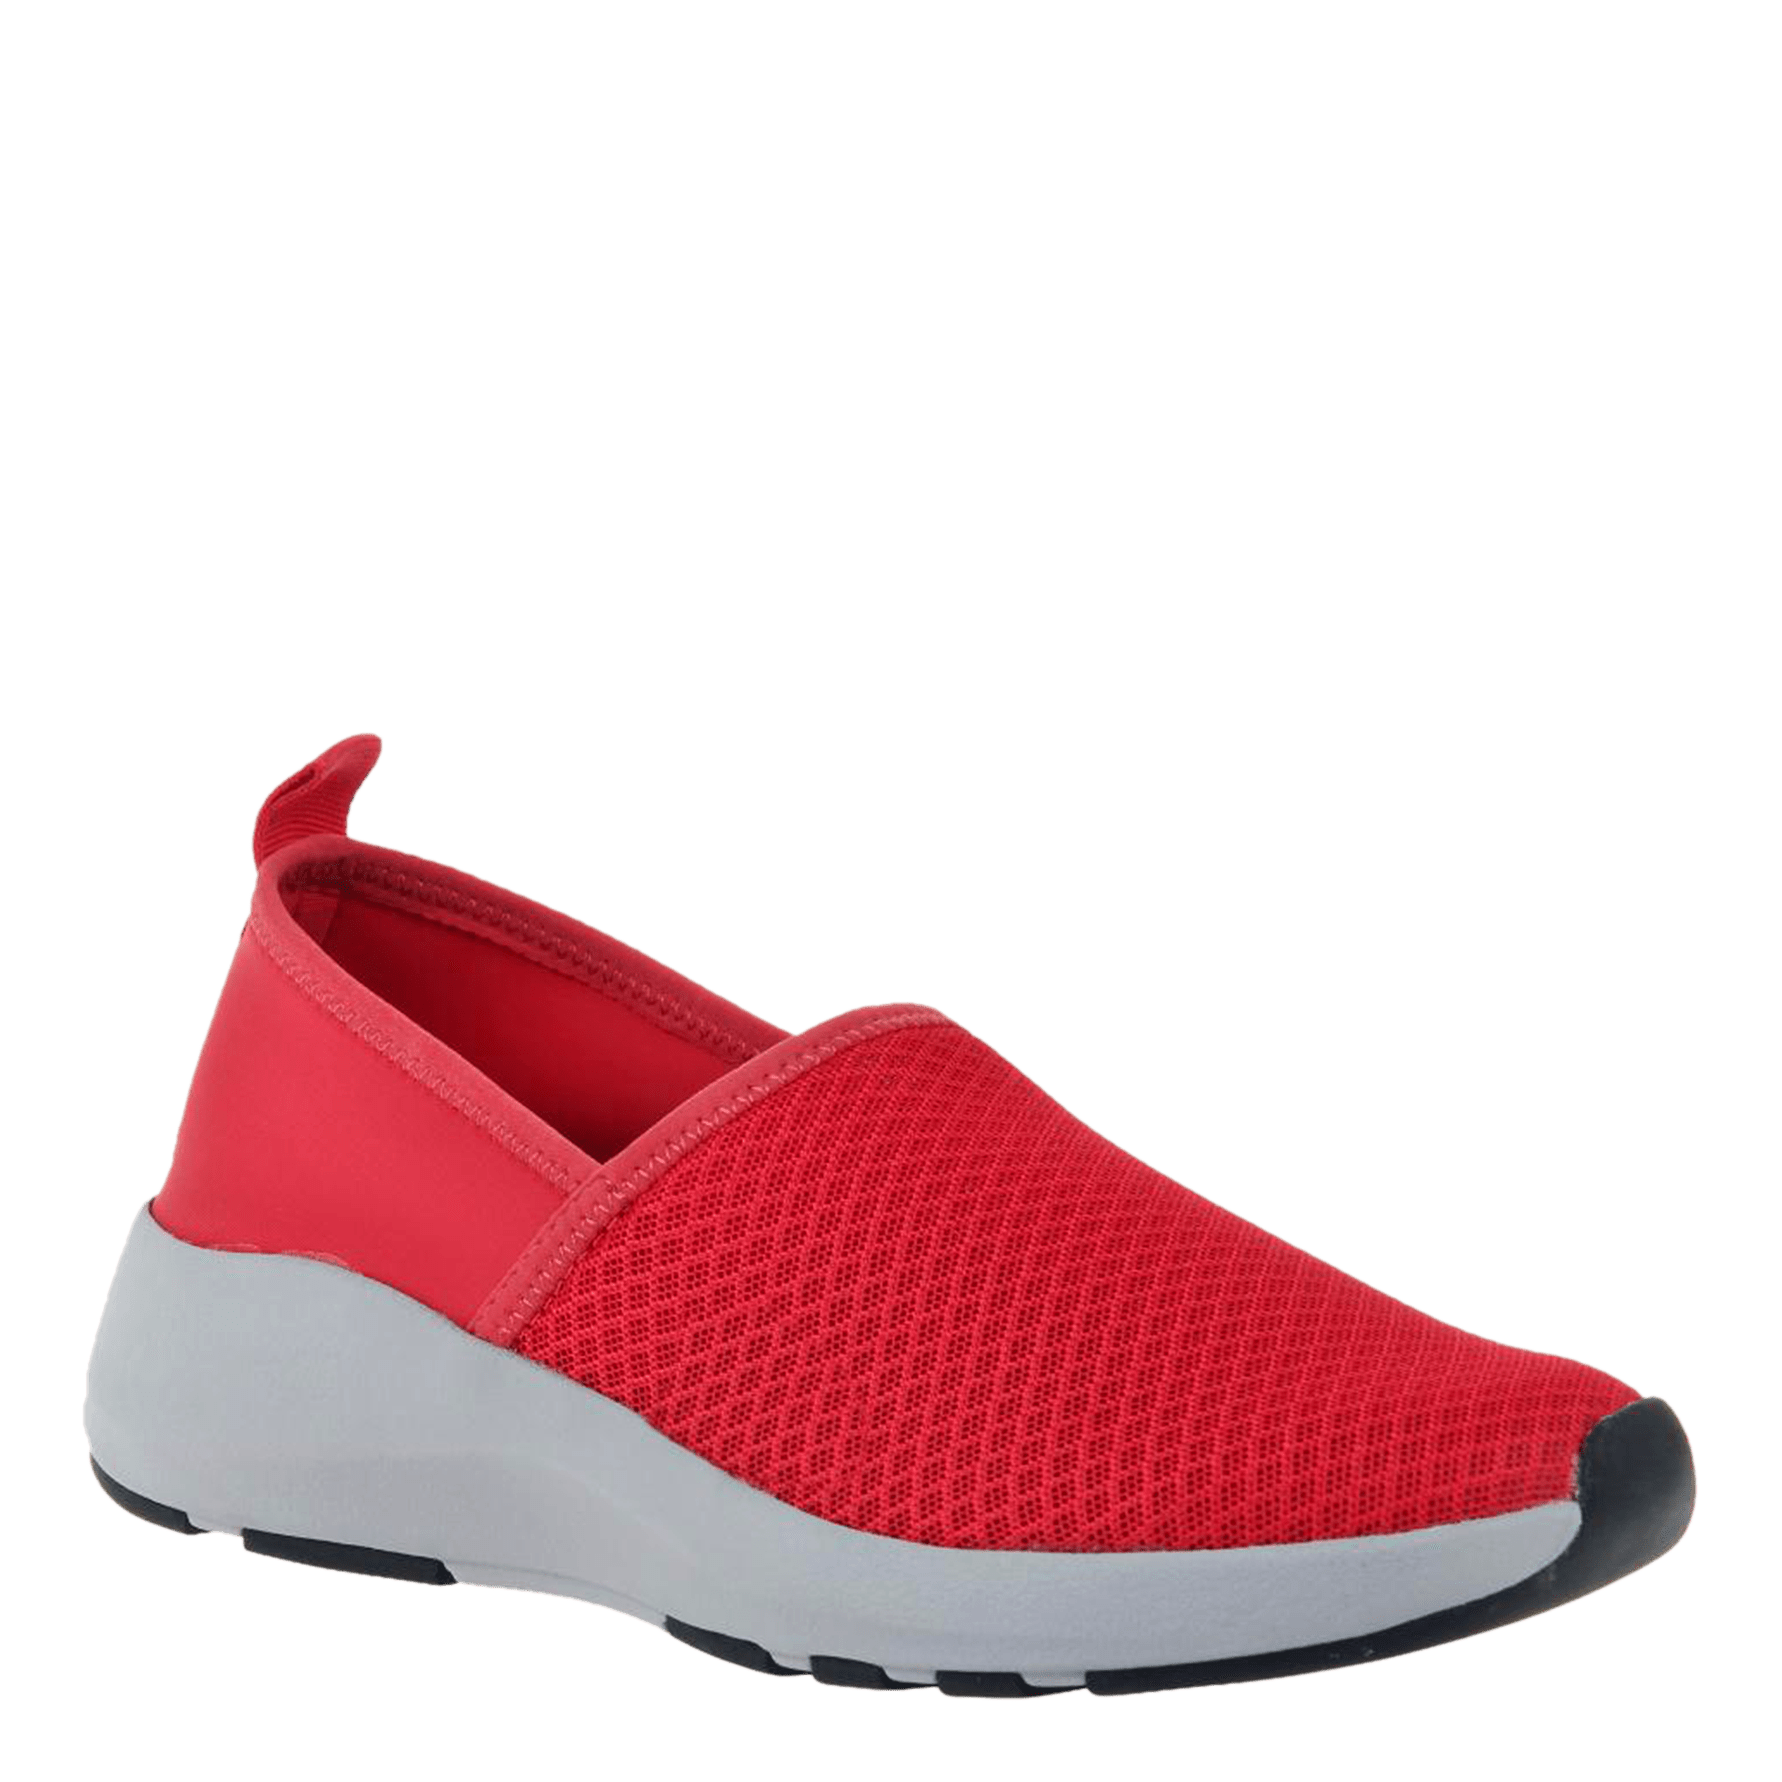 Royce in Red Sneakers | Women's Shoes 